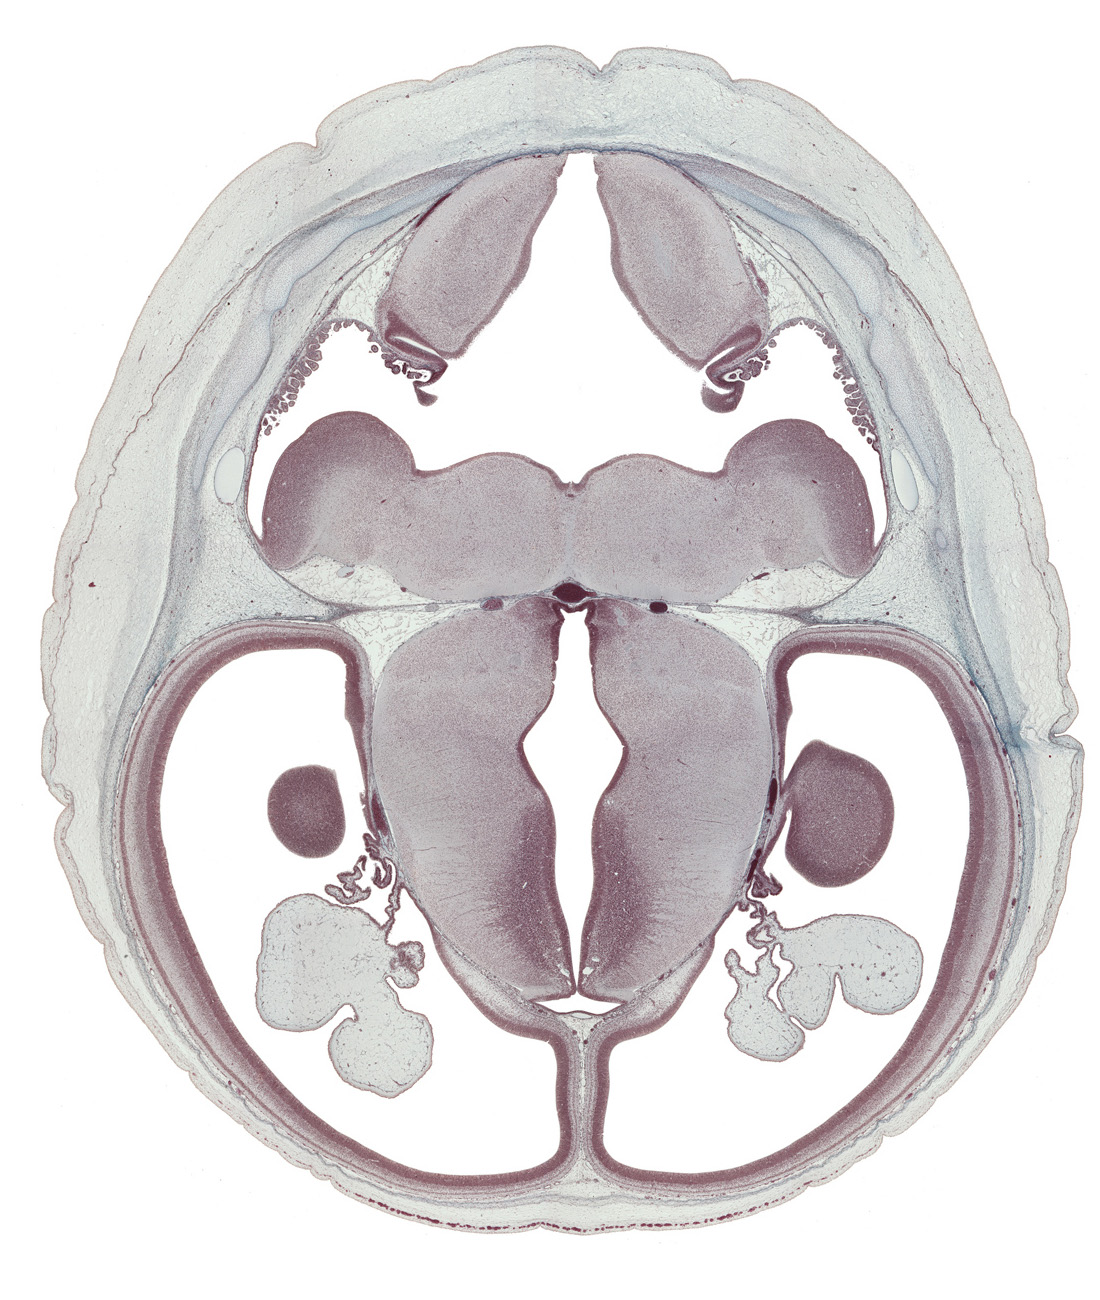 basilar artery, choroid plexus, dorsal thalamus, dural band for tentorium cerebelli, edge of ventricular eminence(s), hypothalamic sulcus, hypothalamus, oculomotor nerve (CN III), rhombencoel (fourth ventricle), sulcus dorsalis, trochlear nerve (CN IV), ventral thalamus